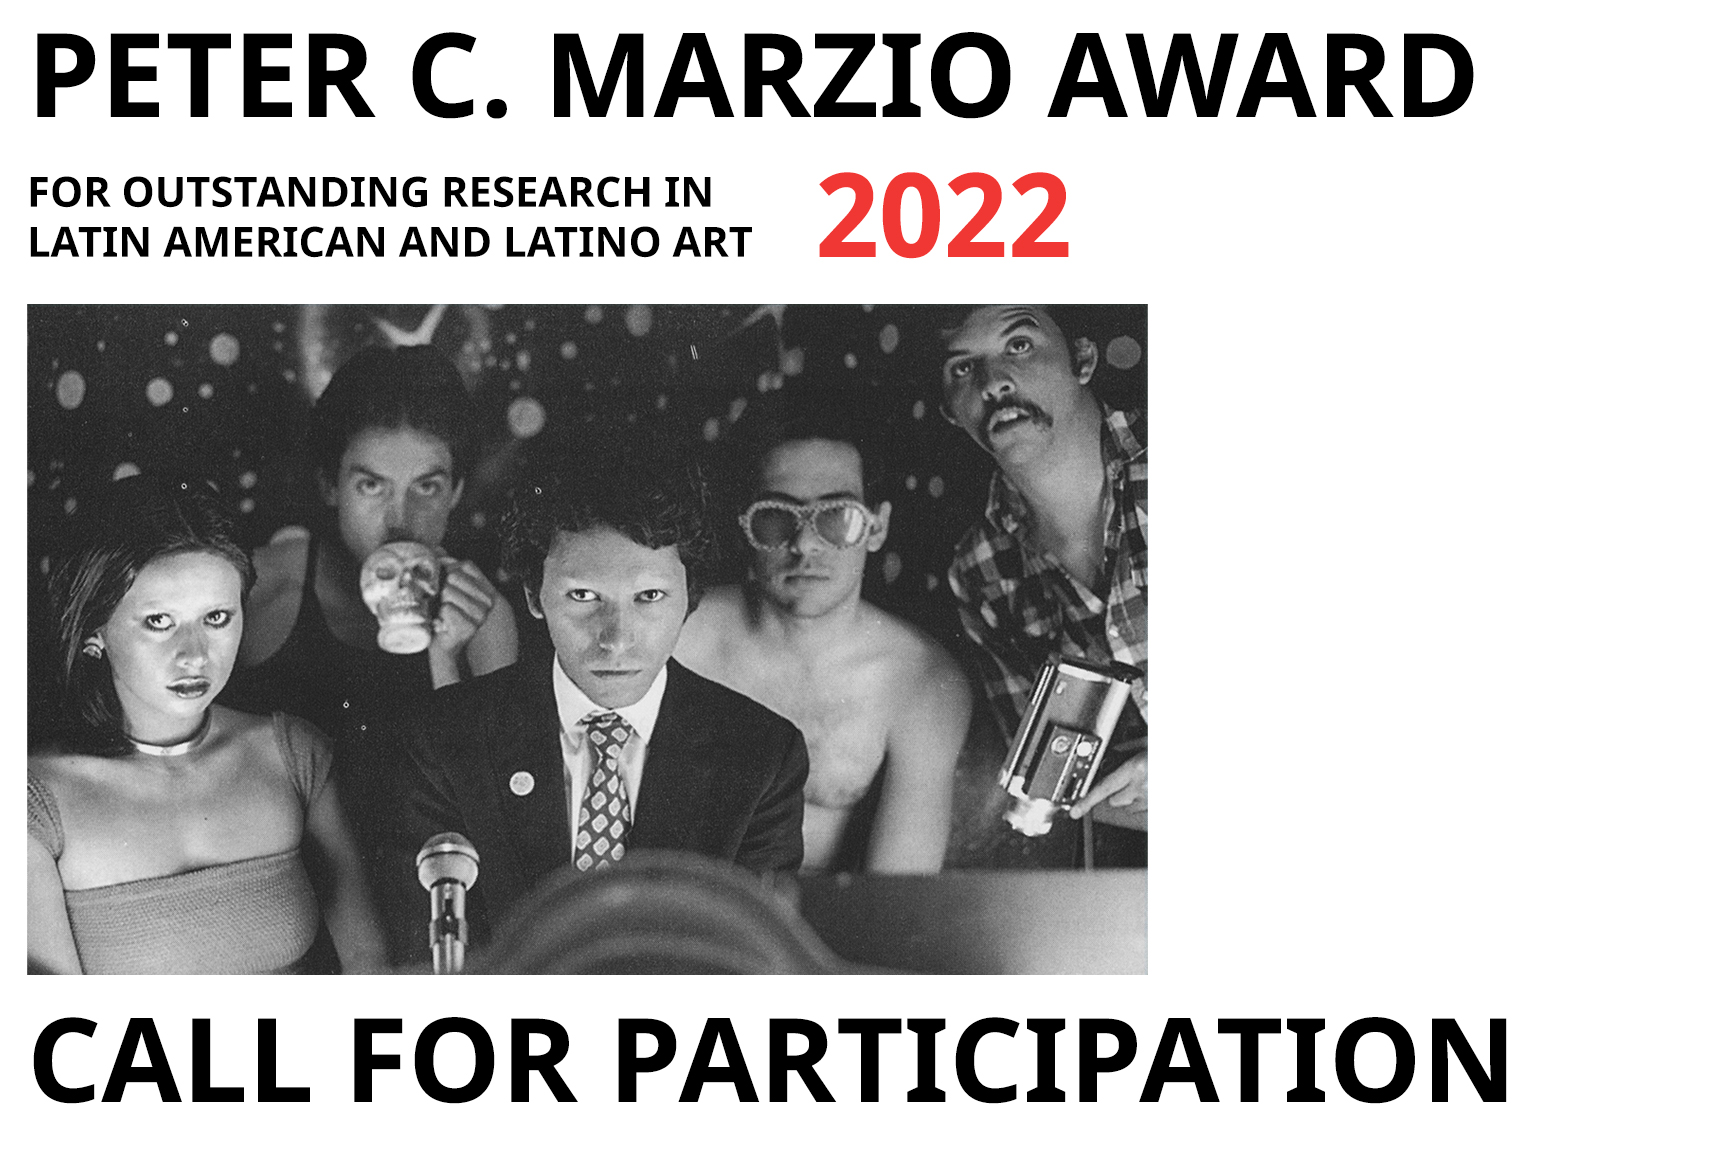 <p><b>Call for Participation: Peter C. Marzio Award 2022</b></p>
